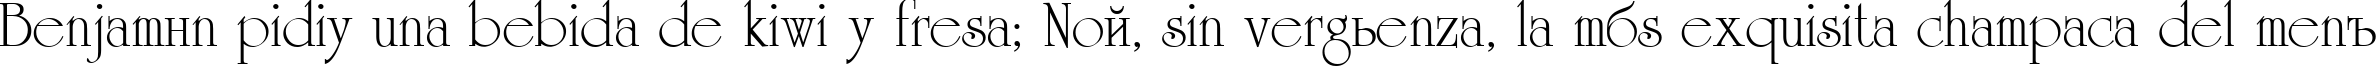 Пример написания шрифтом Unicorn текста на испанском